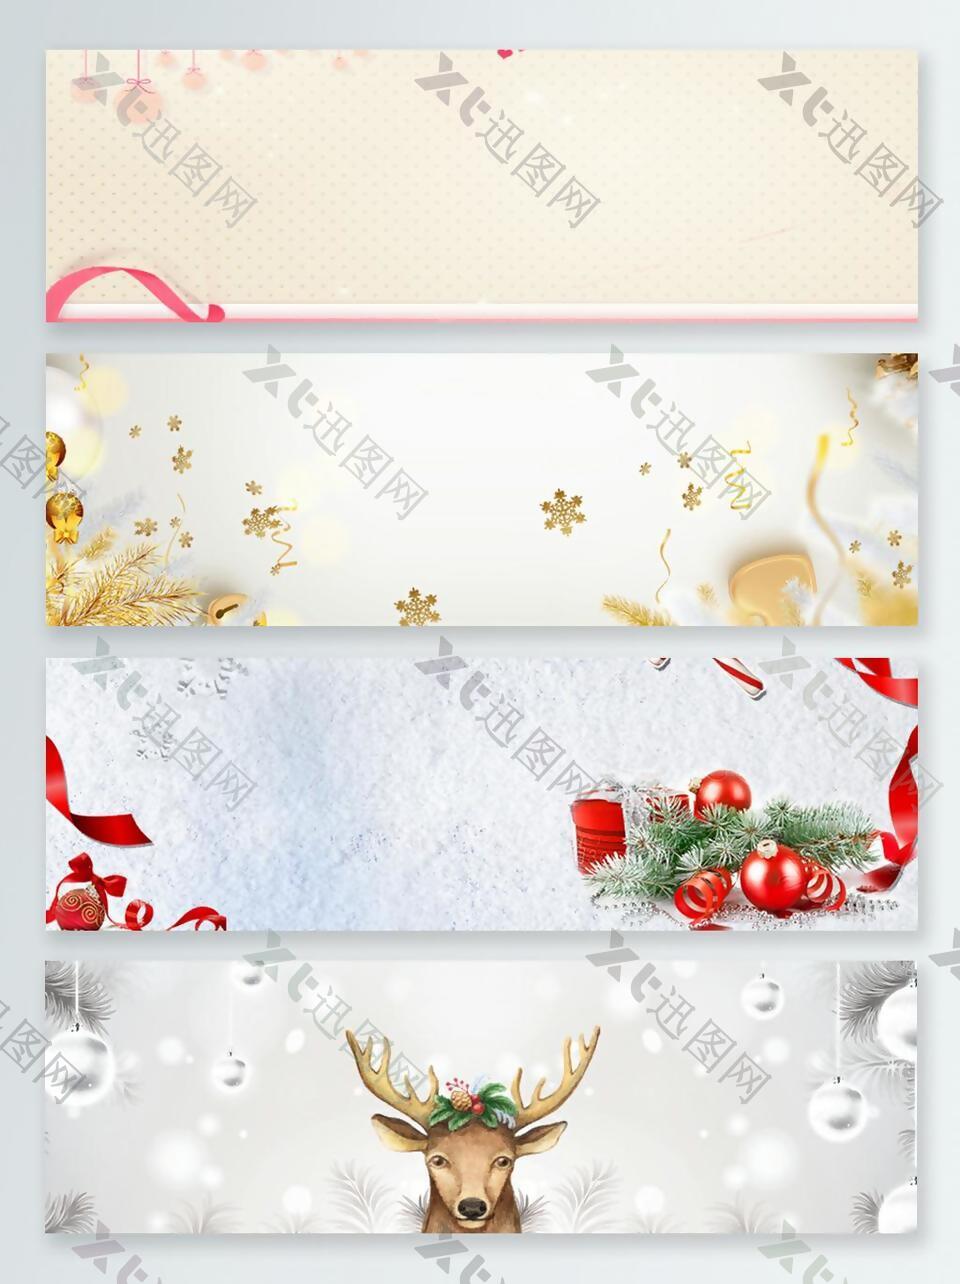 鹿子圣诞装饰banner背景